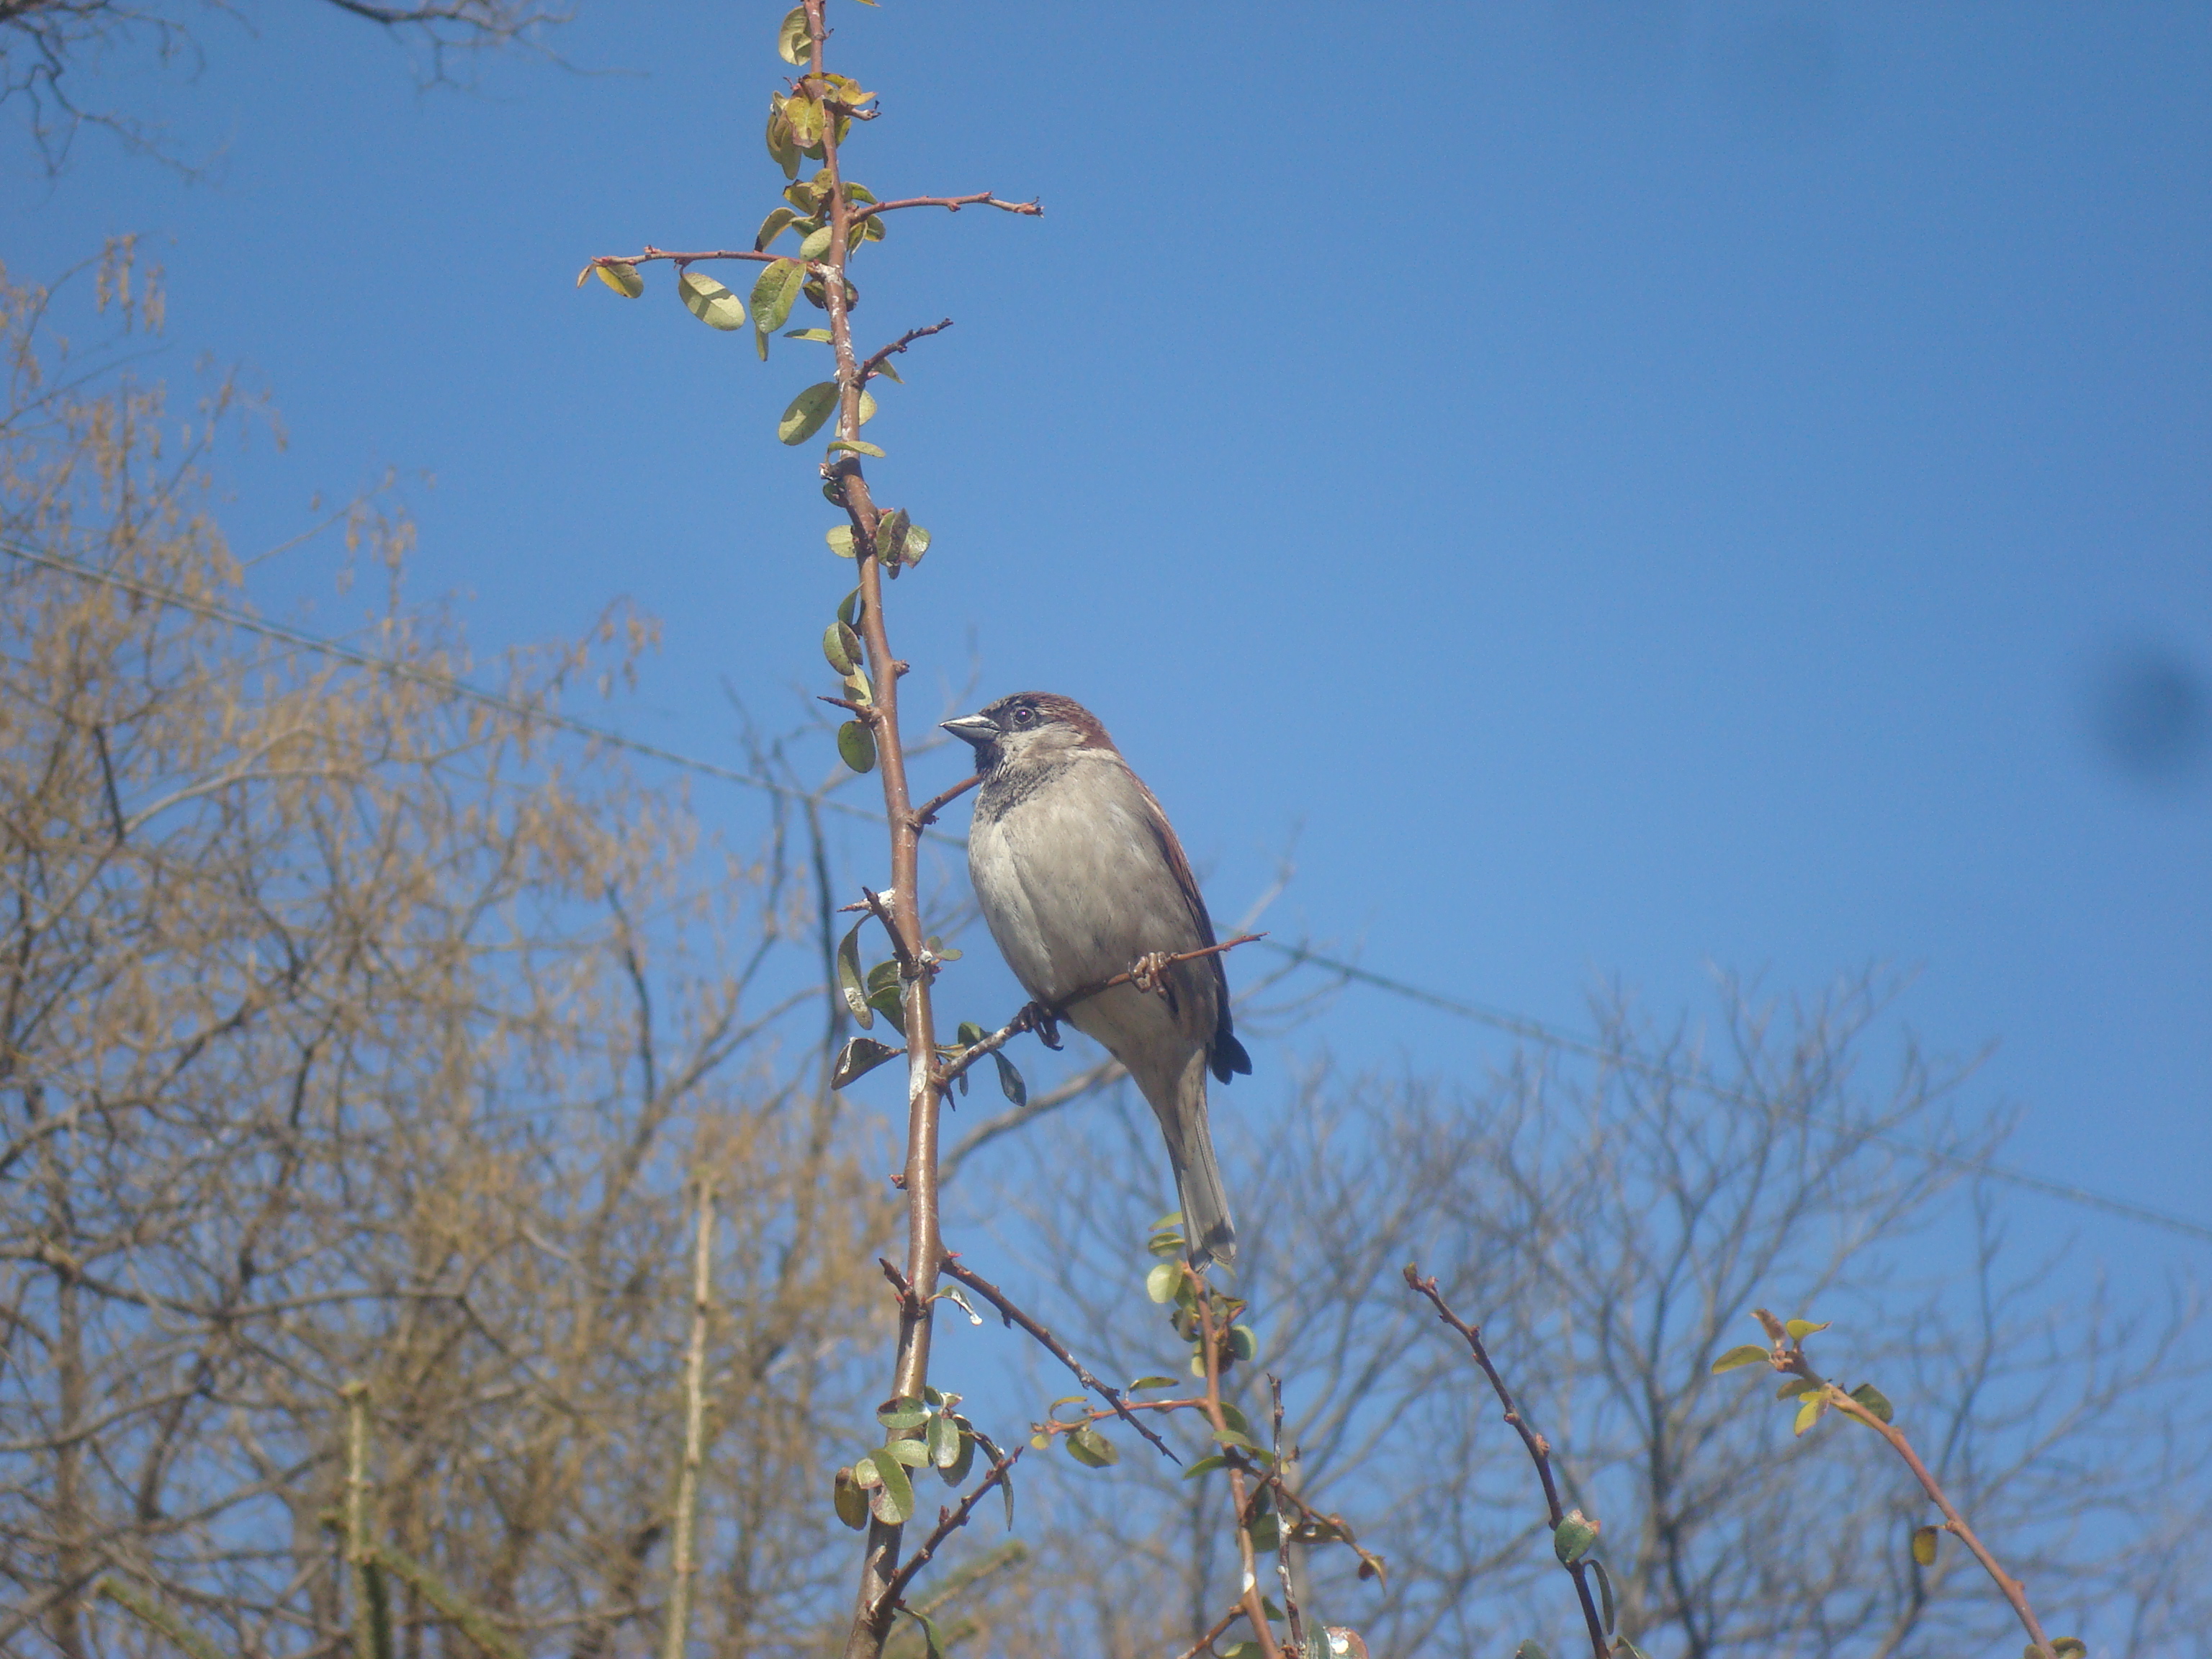 A sparrow on a branch photo